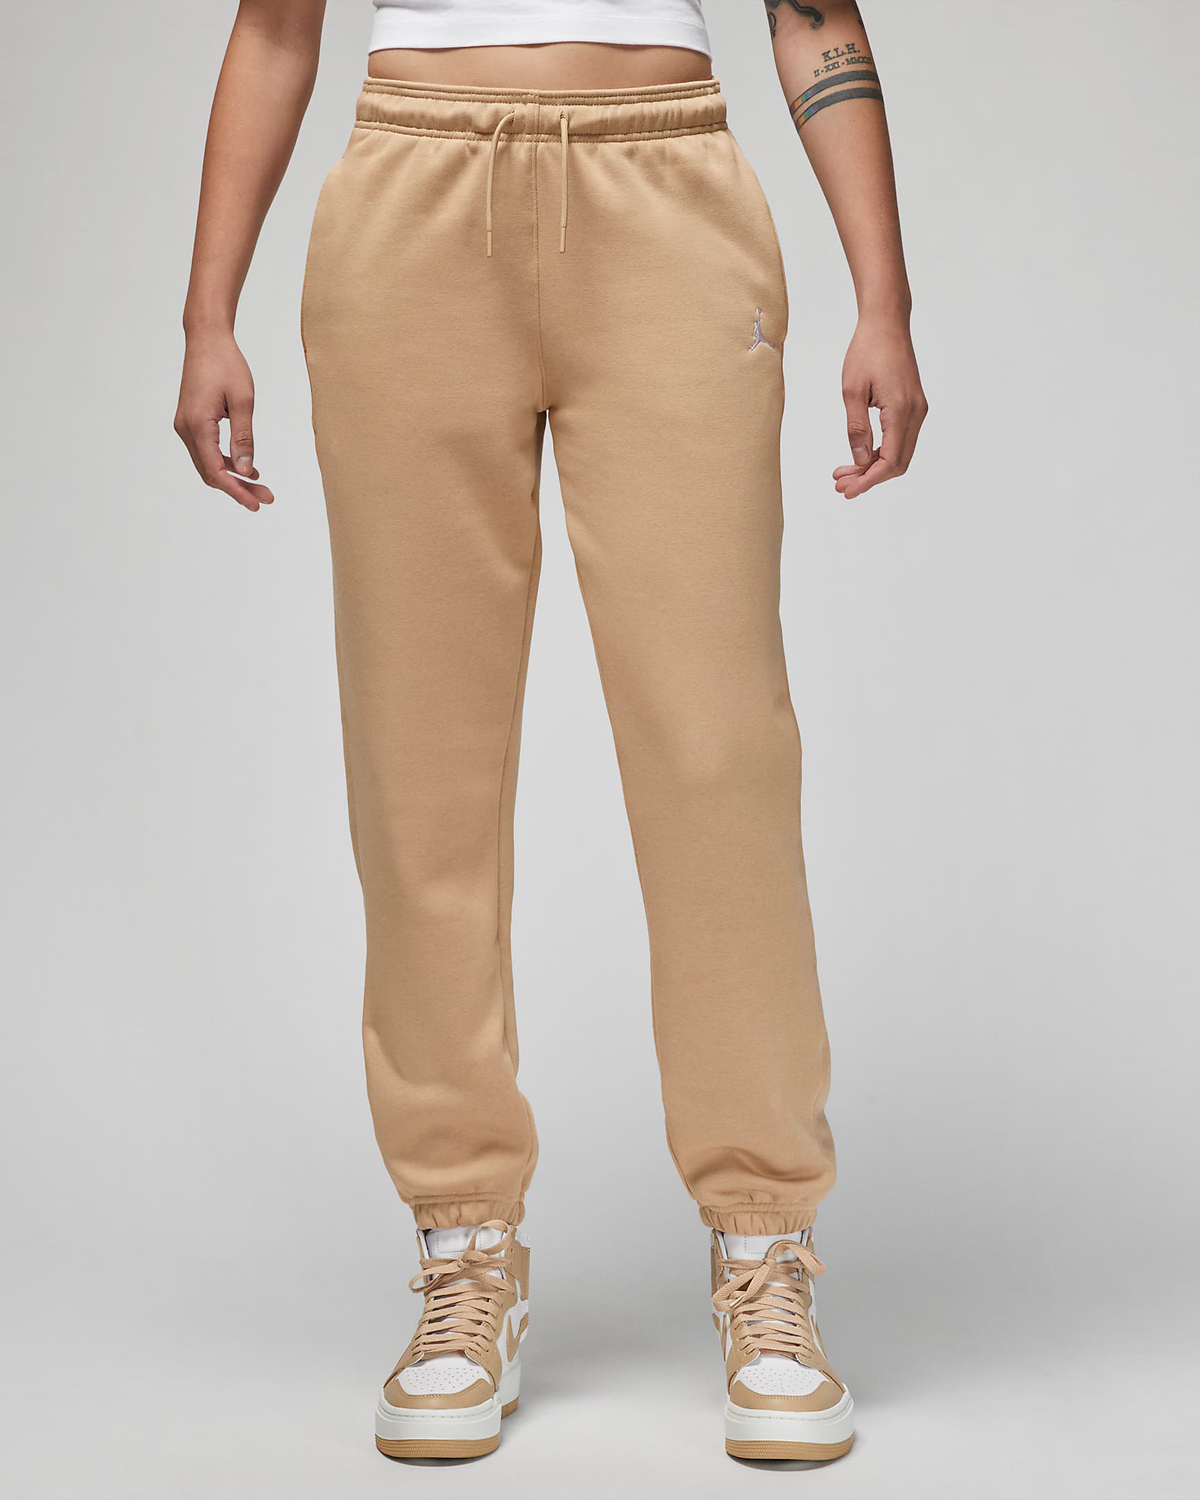 Jordan-Brooklyn-Womens-Fleece-Pants-Desert